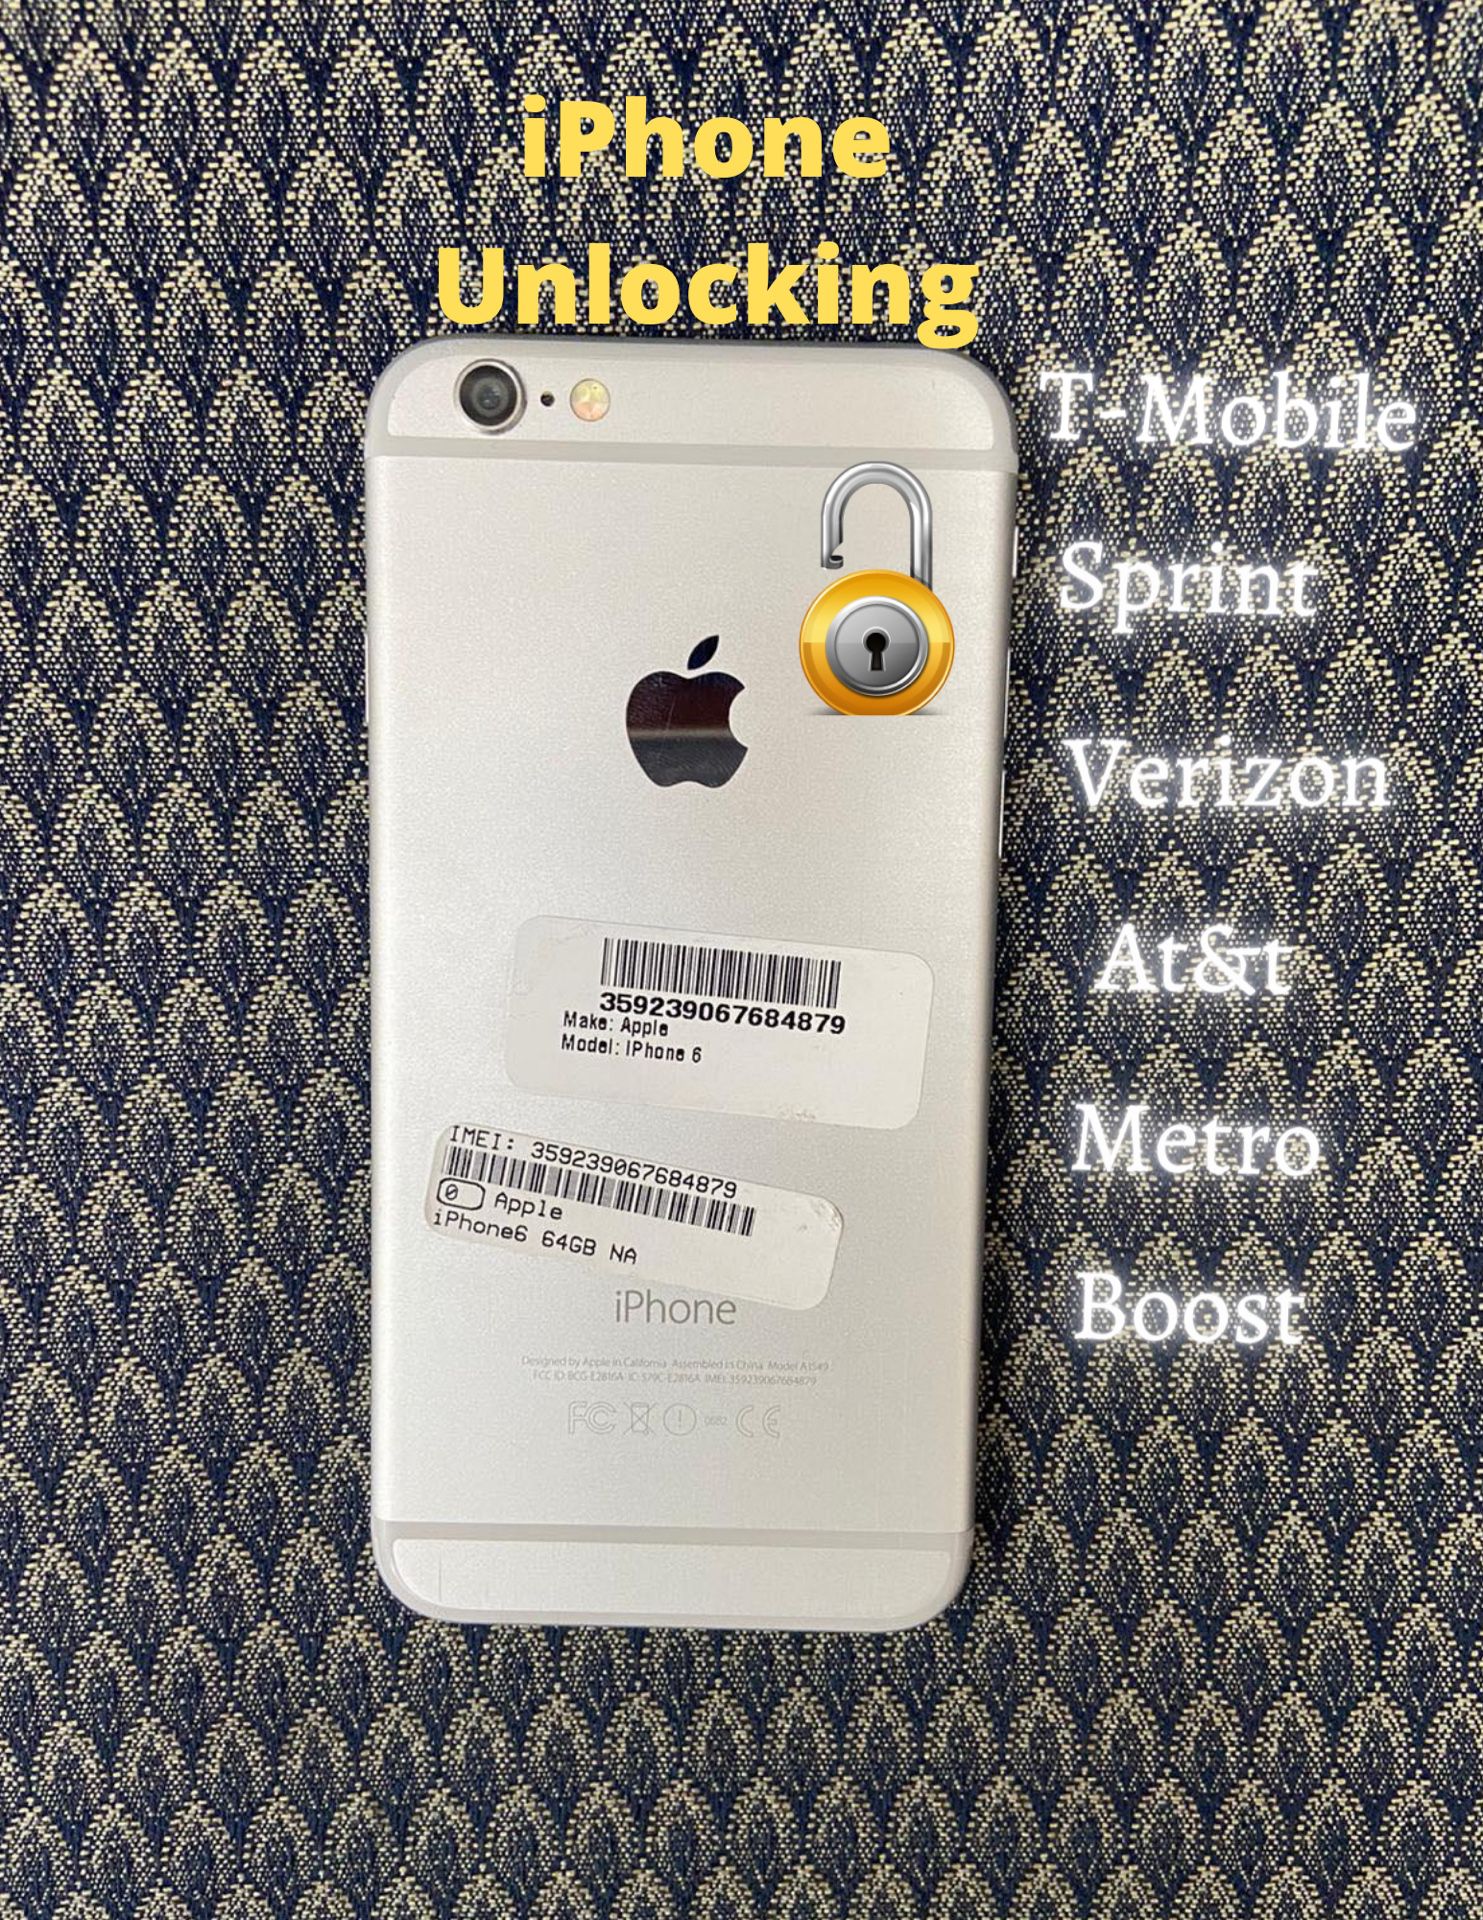 iPhone Unlocking